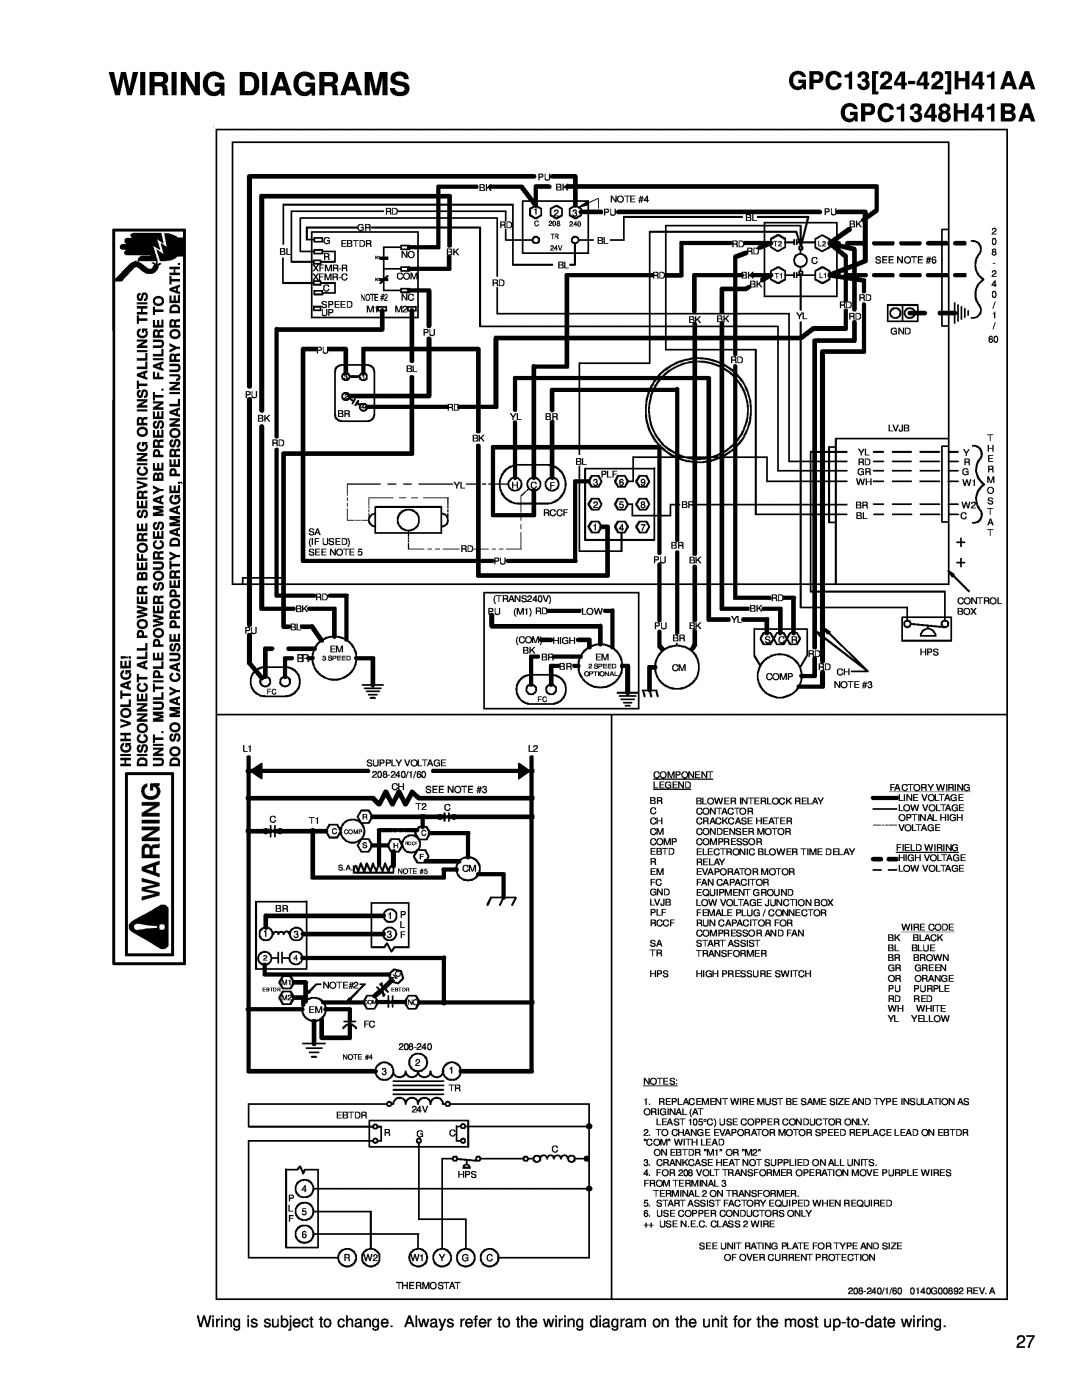 Goodmans GPC1324H41A, GPC 13 SEER R-410A service manual Wiring Diagrams, GPC1324-42H41AAGPC1348H41BA 